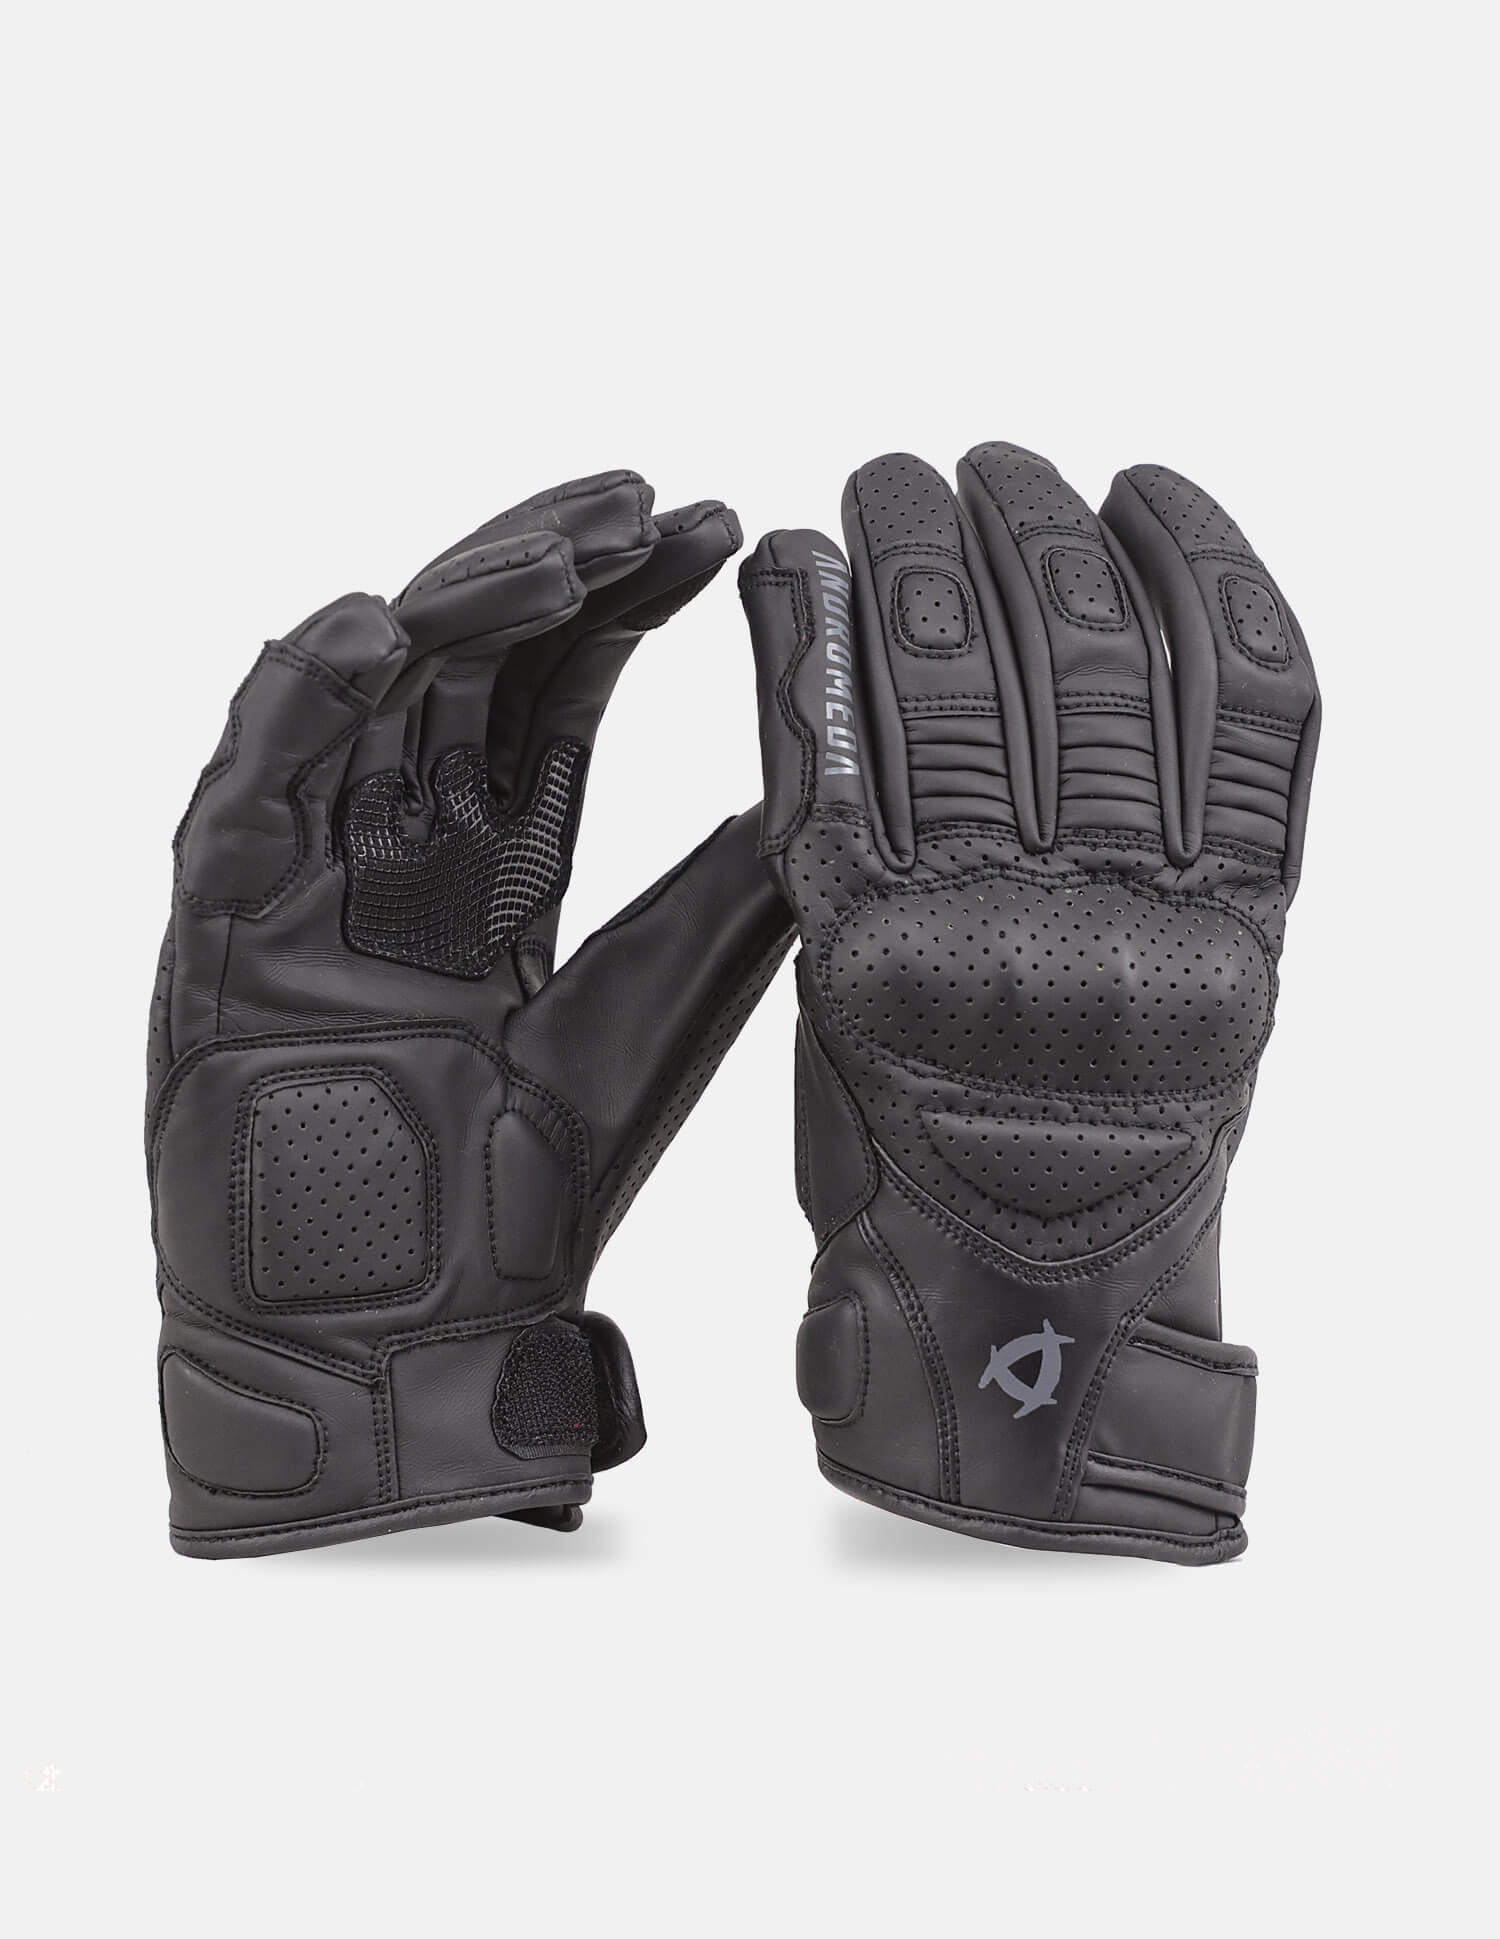 Meteor + Apollo gloves pack